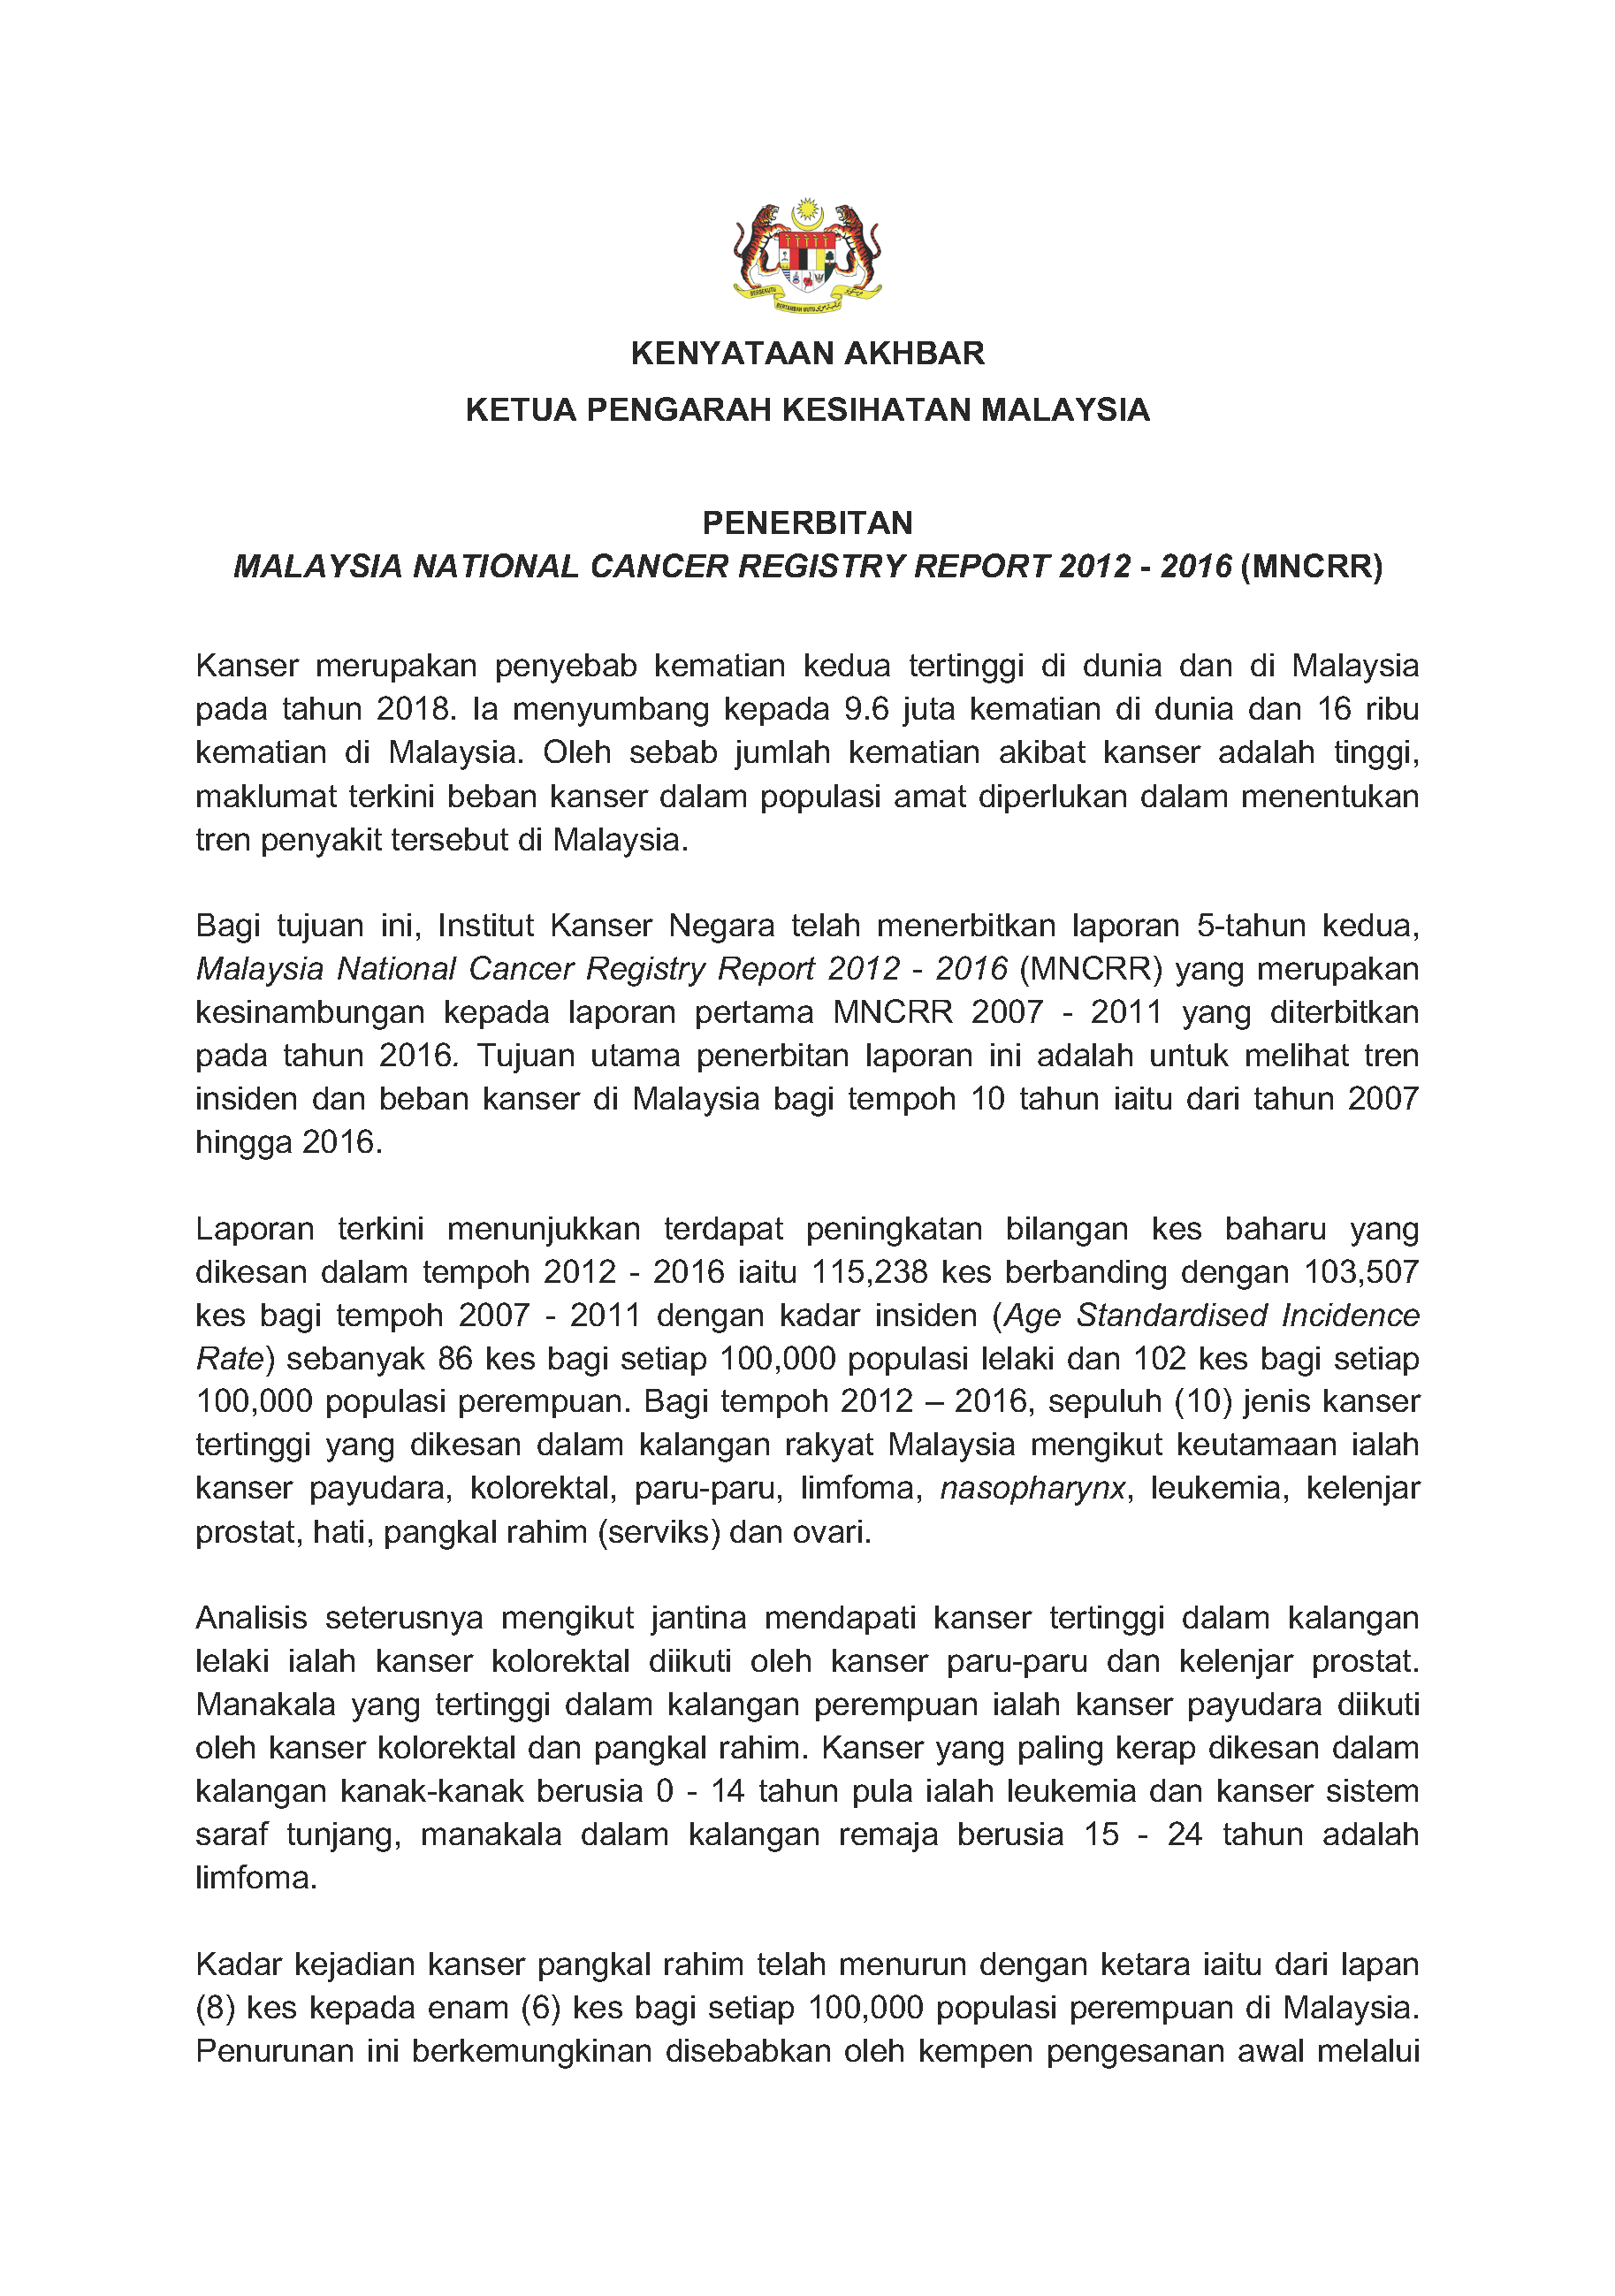 KENYATAAN AKHBAR KPK 3 Januari 2020 PENERBITAN MALAYSIA NATIONAL CANCER REGISTRY REPORT 2012 2016 Page 1